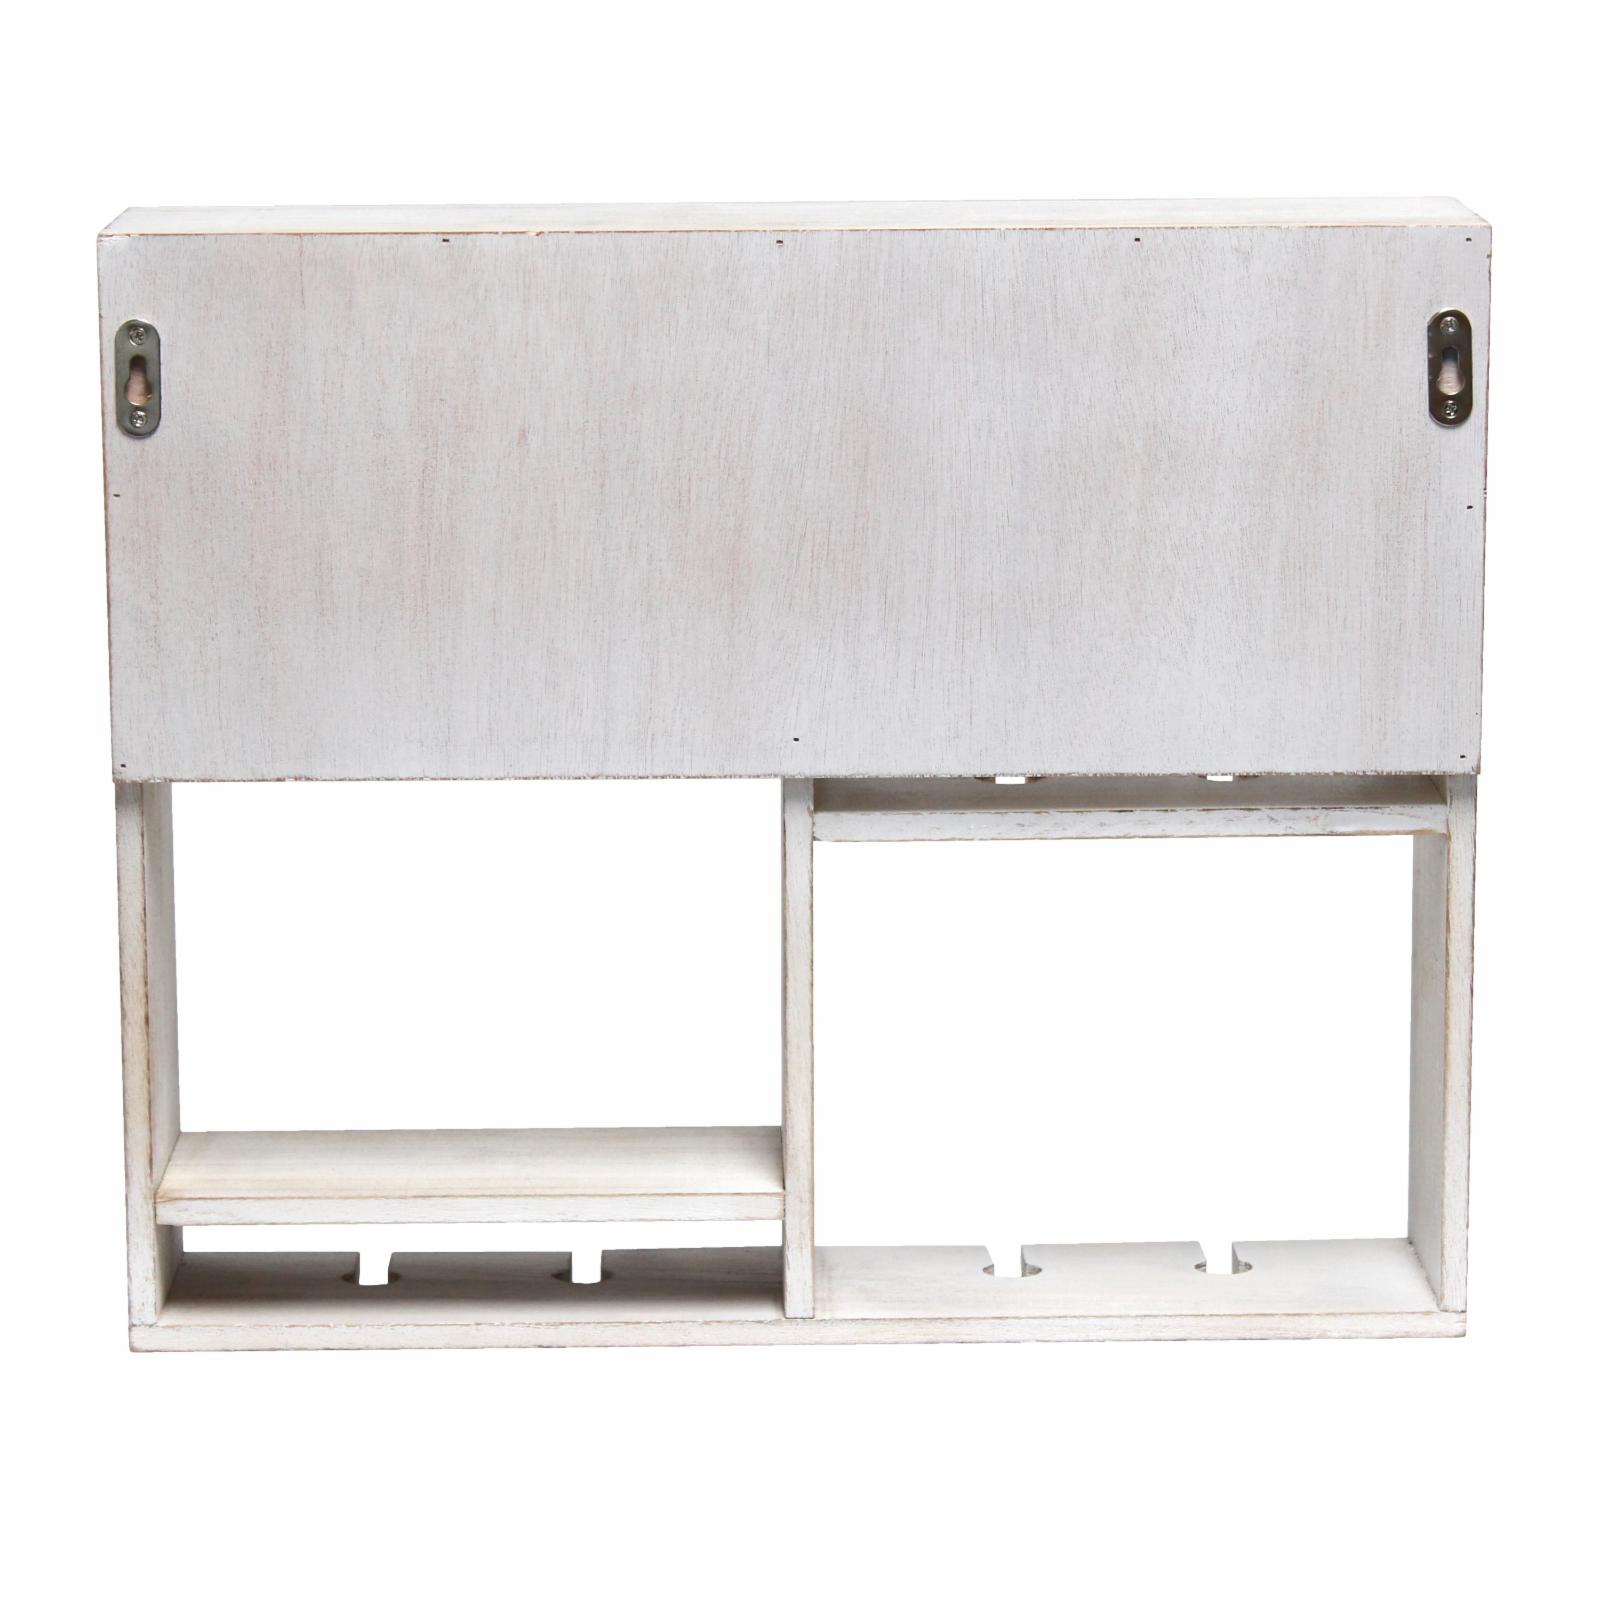 Elegant Designs Bartow Wall Mounted Wood Wine Rack Shelf with Glass Holder, White Wash